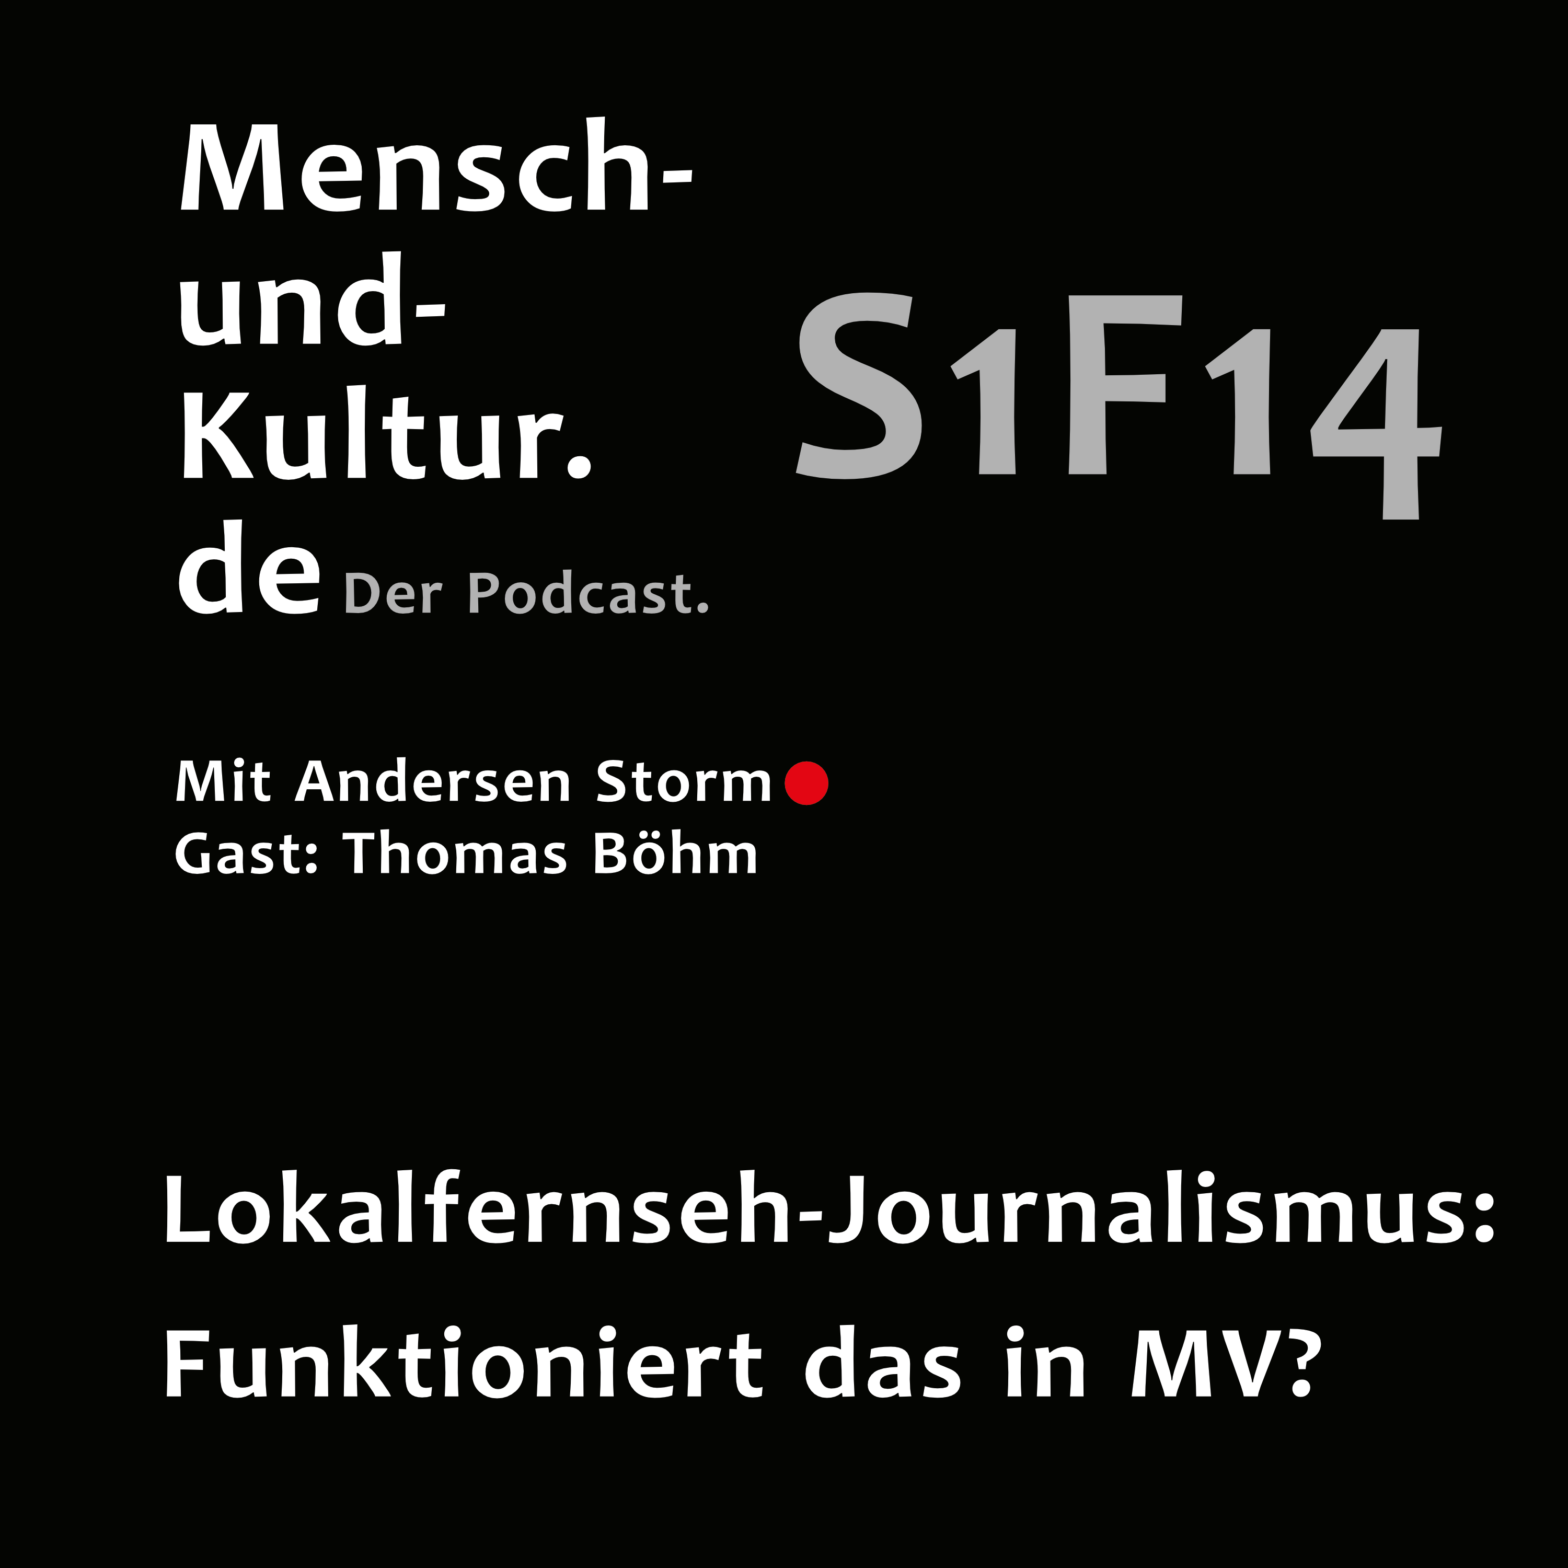 Podcastepisode S1F14, Mensch-und-Kultur.de - der Podcast